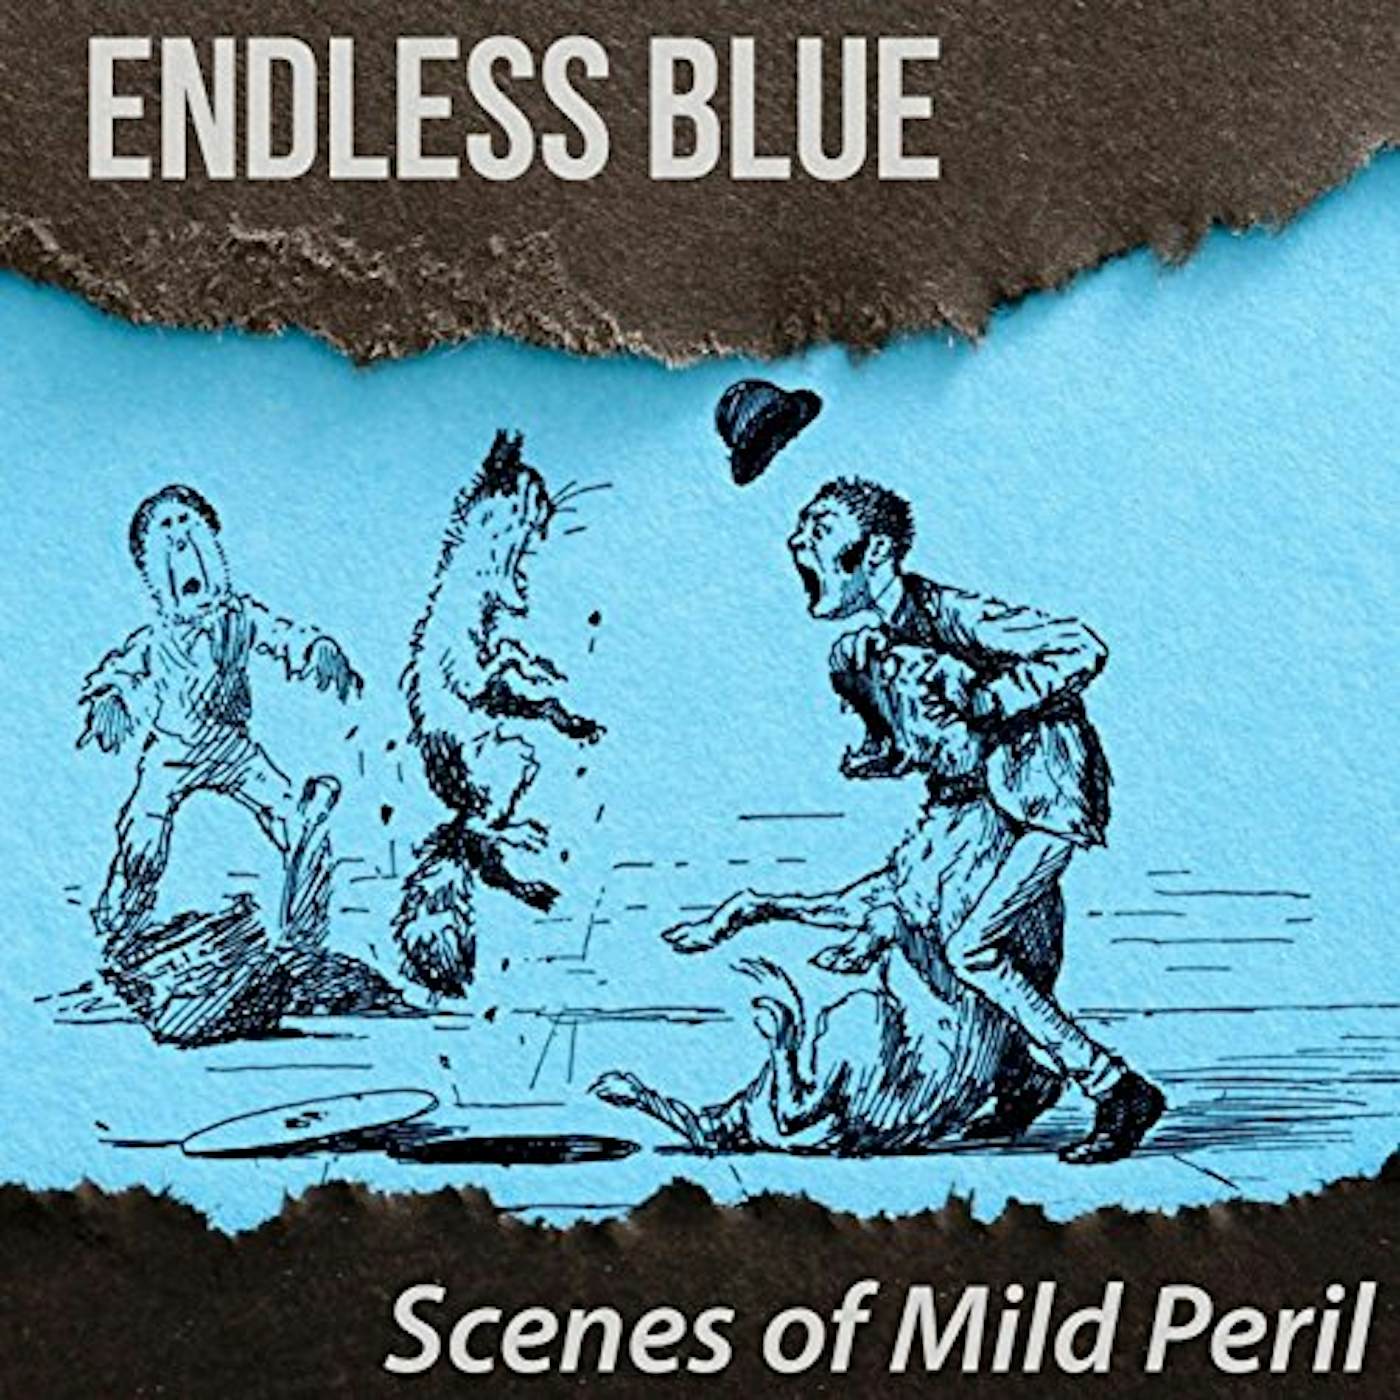 Endless Blue SCENES OF MILD PERIL CD